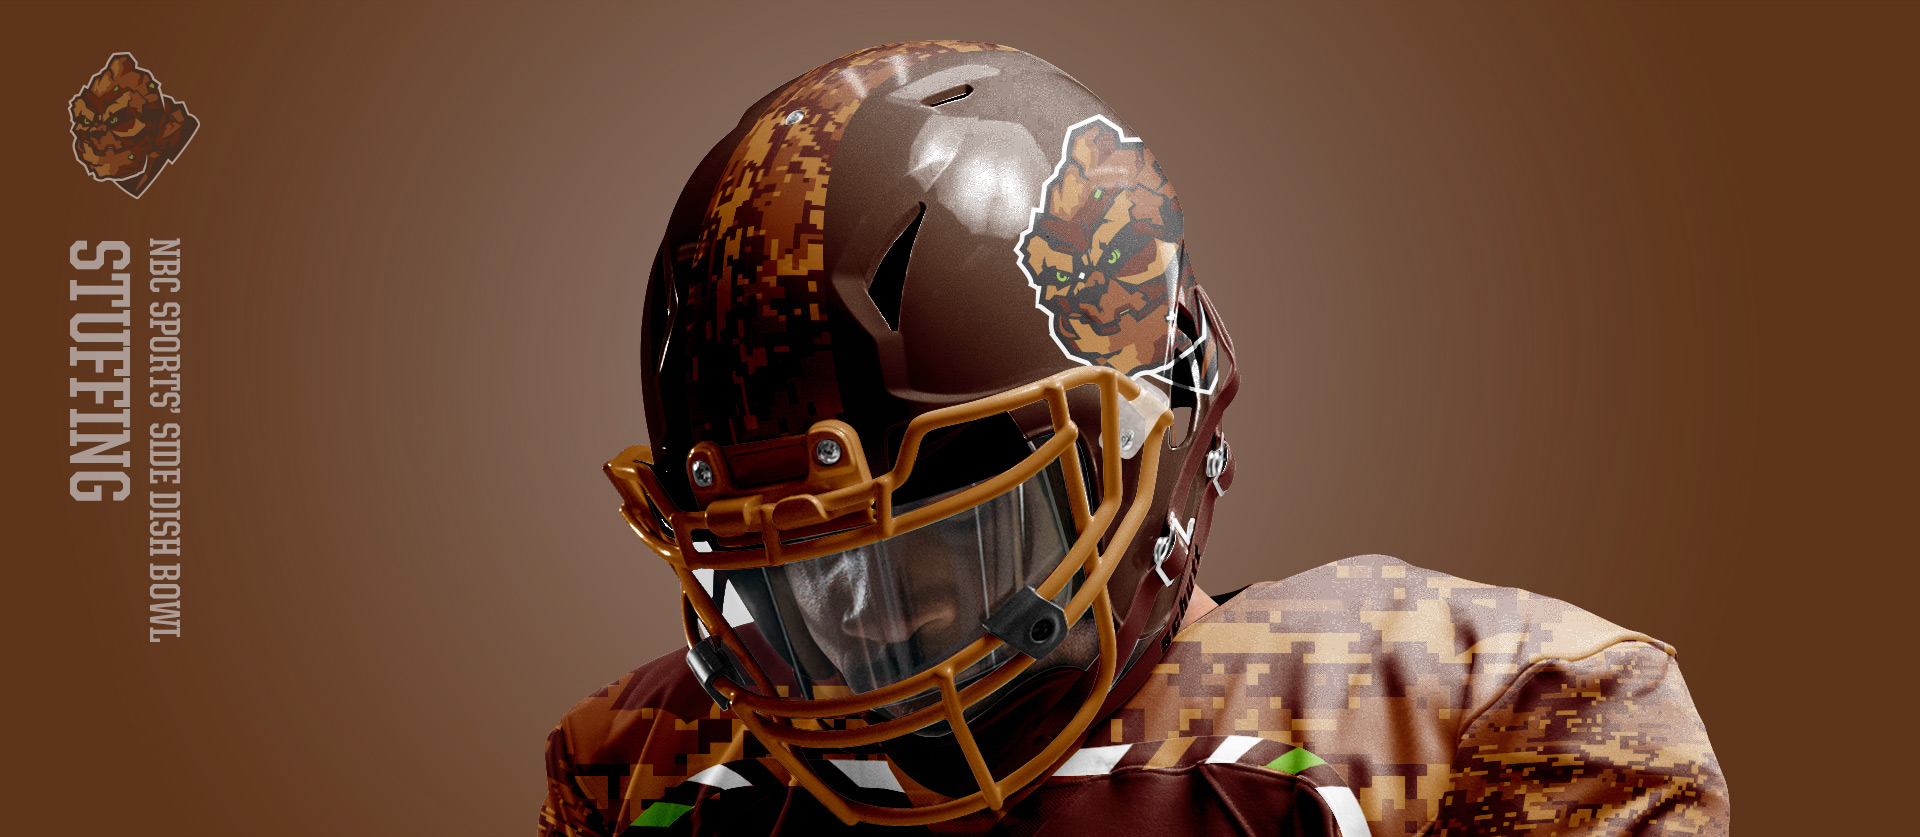 Stuffing Helmet Frontside - Football Uniform Design for NBC Sports Thanksgiving Side Dish Bowl